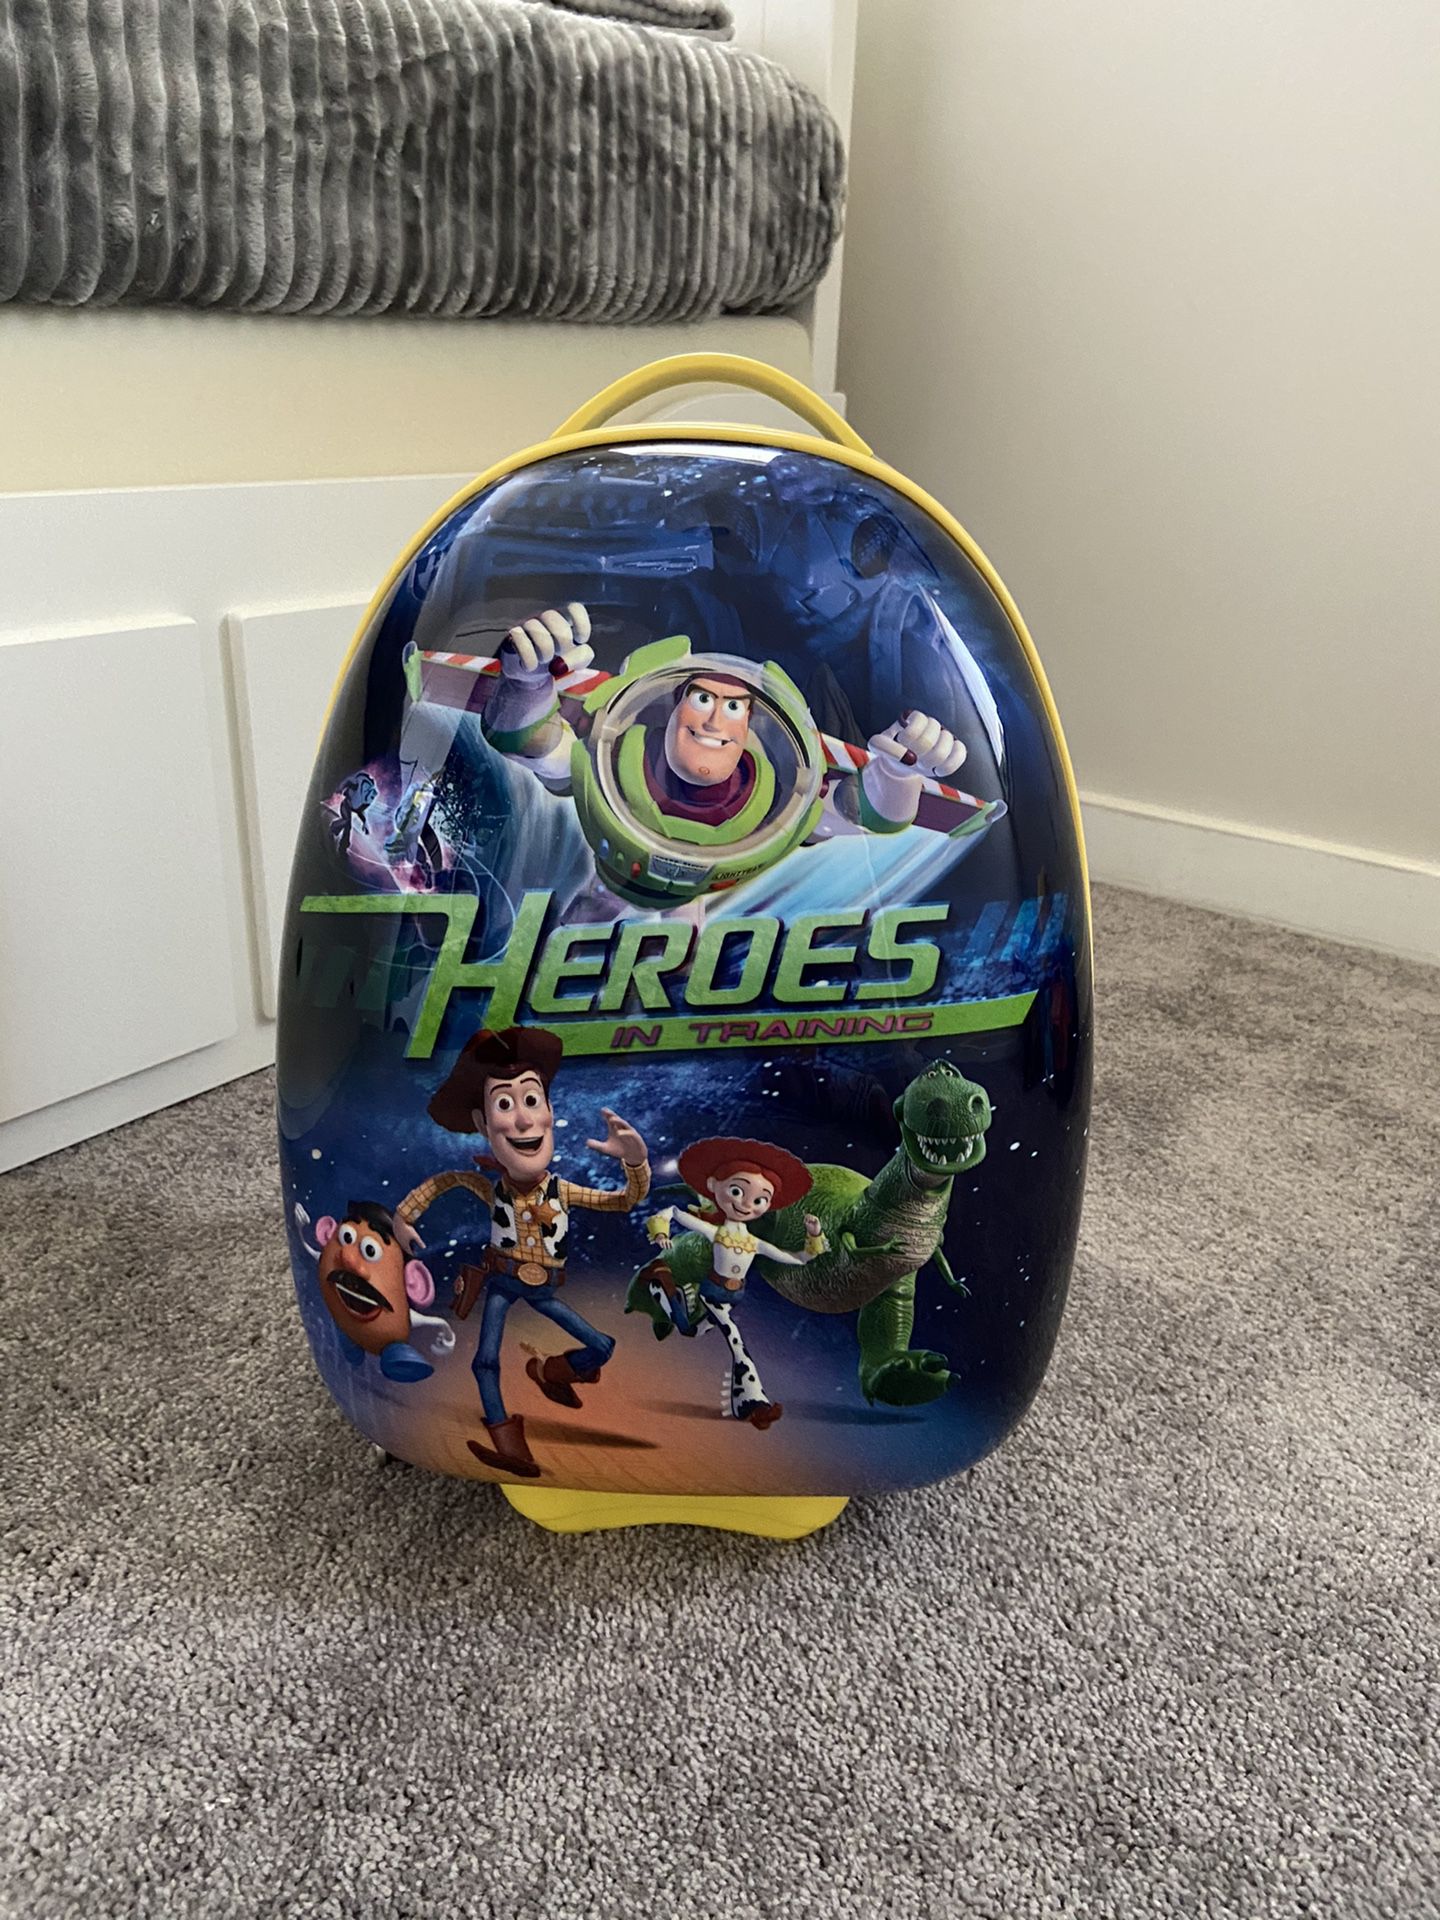 Toy Story kids luggage